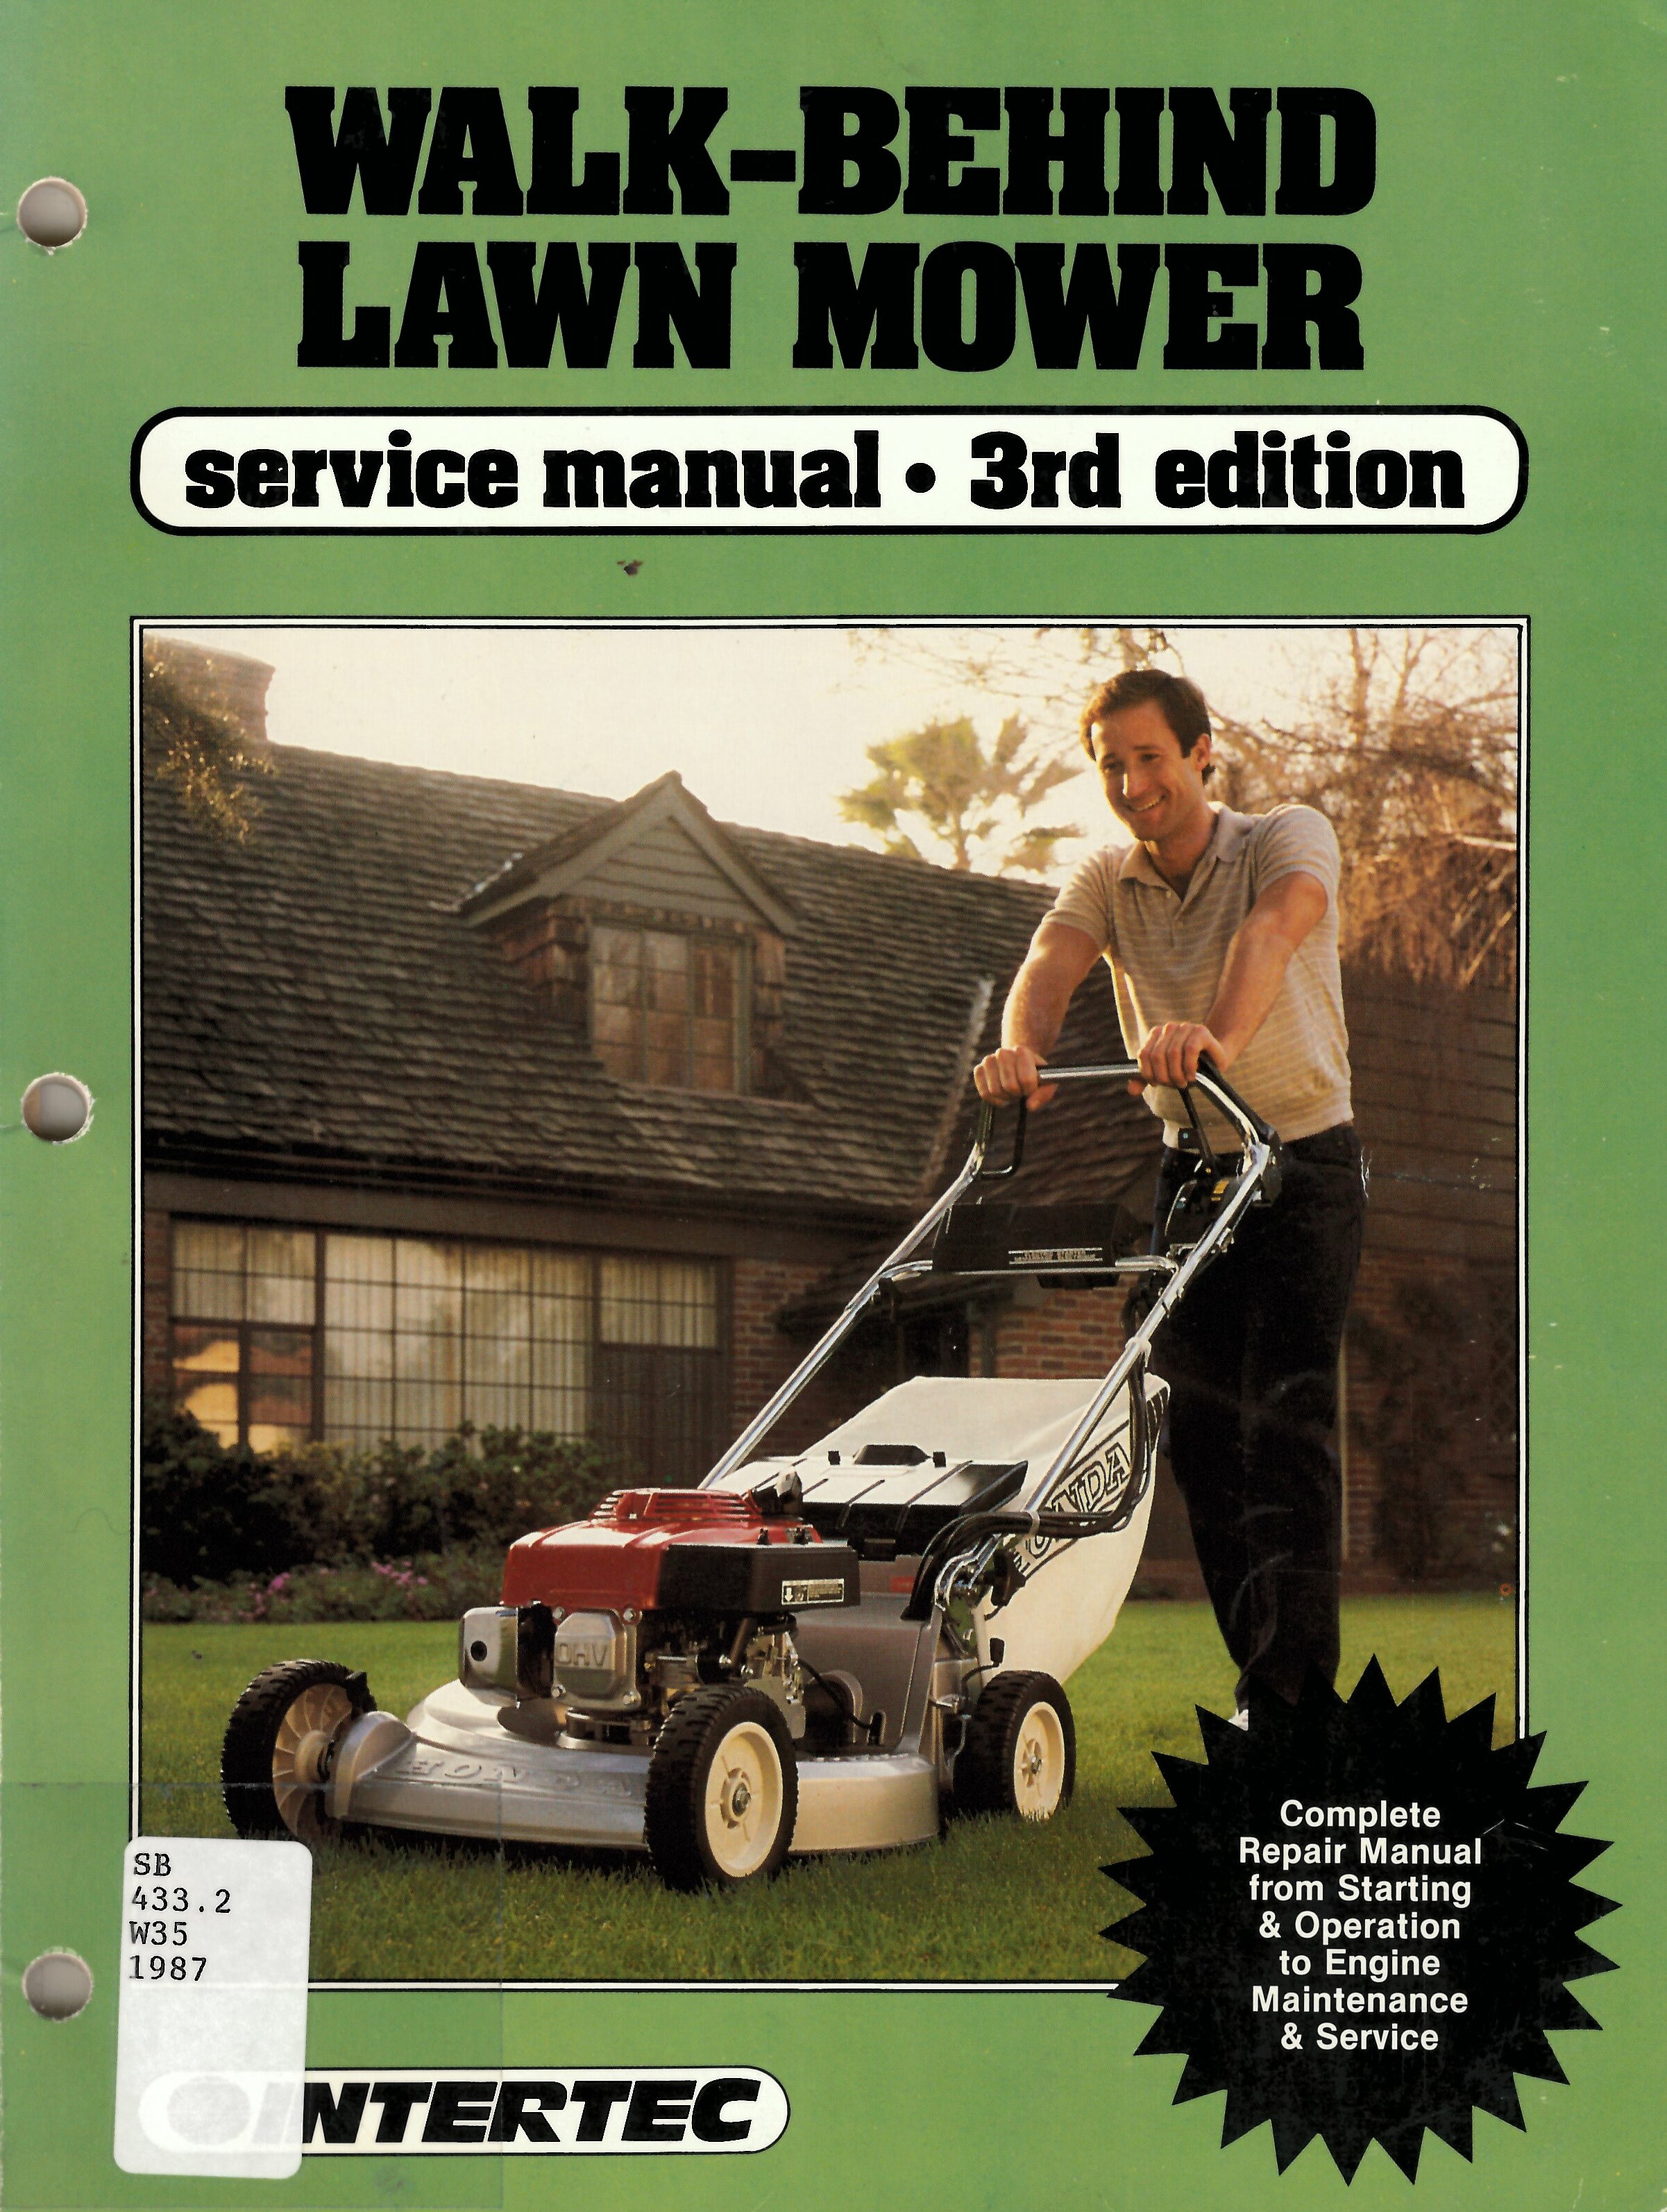 Walk behind lawn mower service manual.